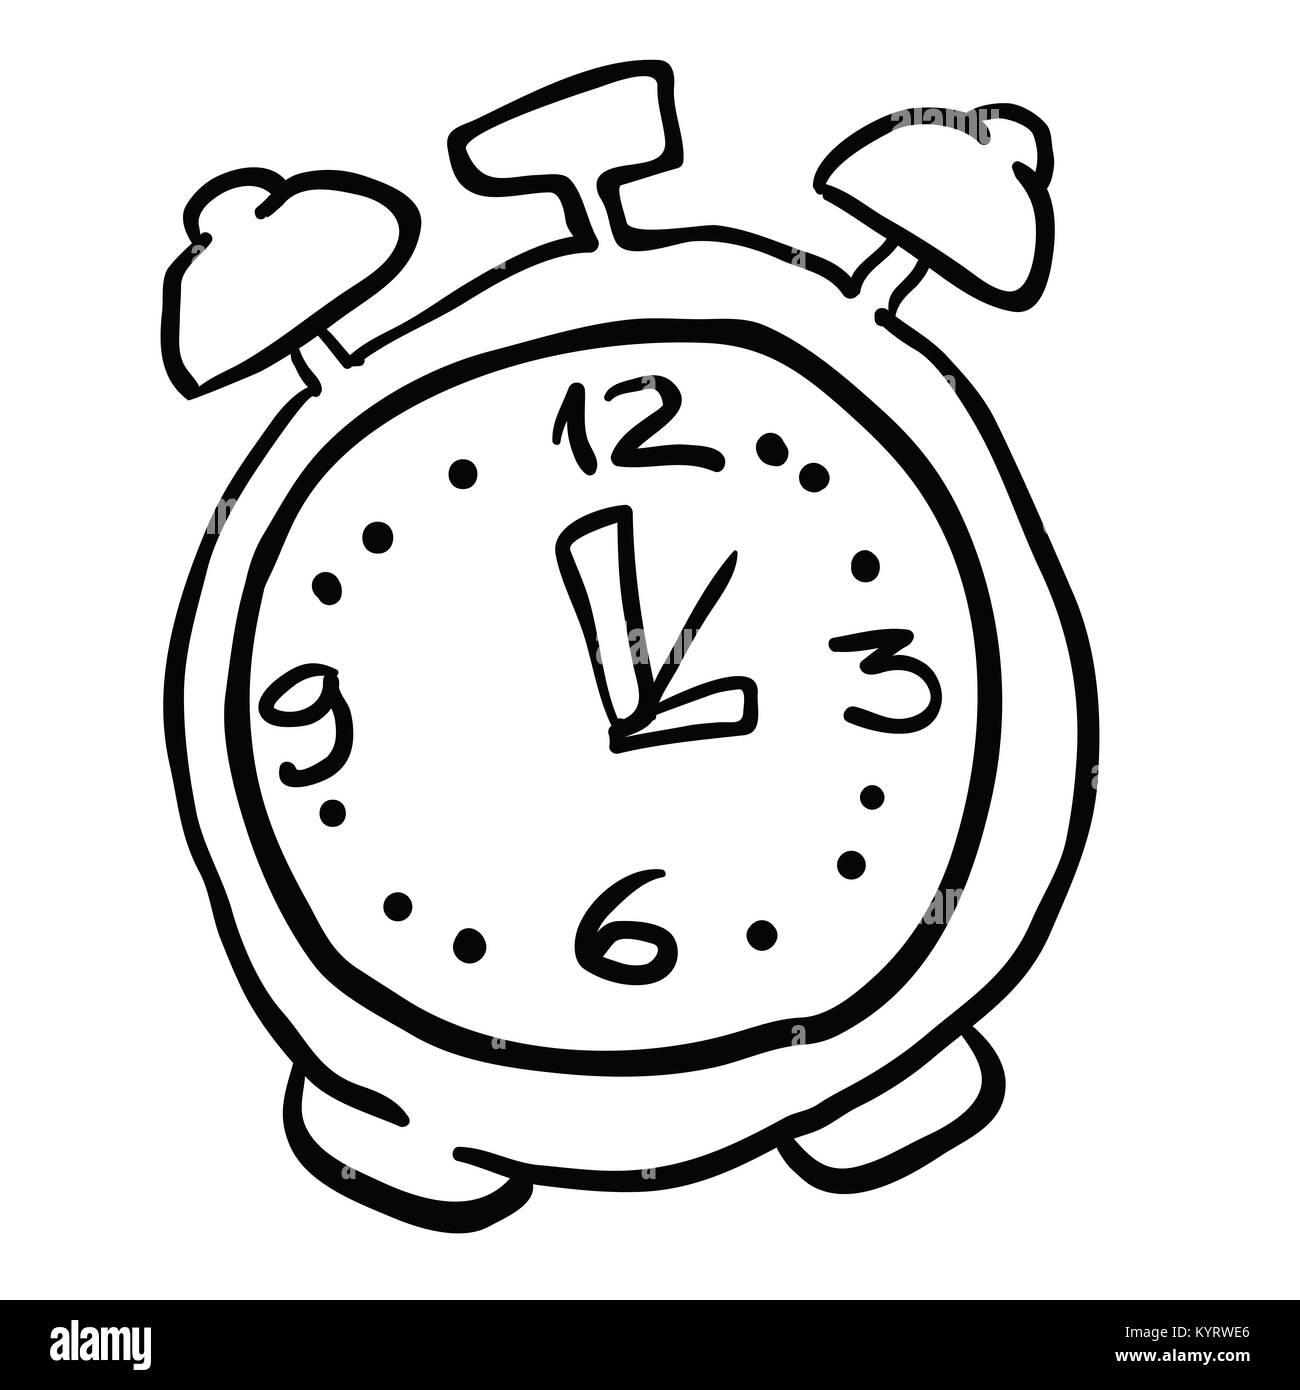 Cartoon clock Black and White Stock Photos & Images - Alamy